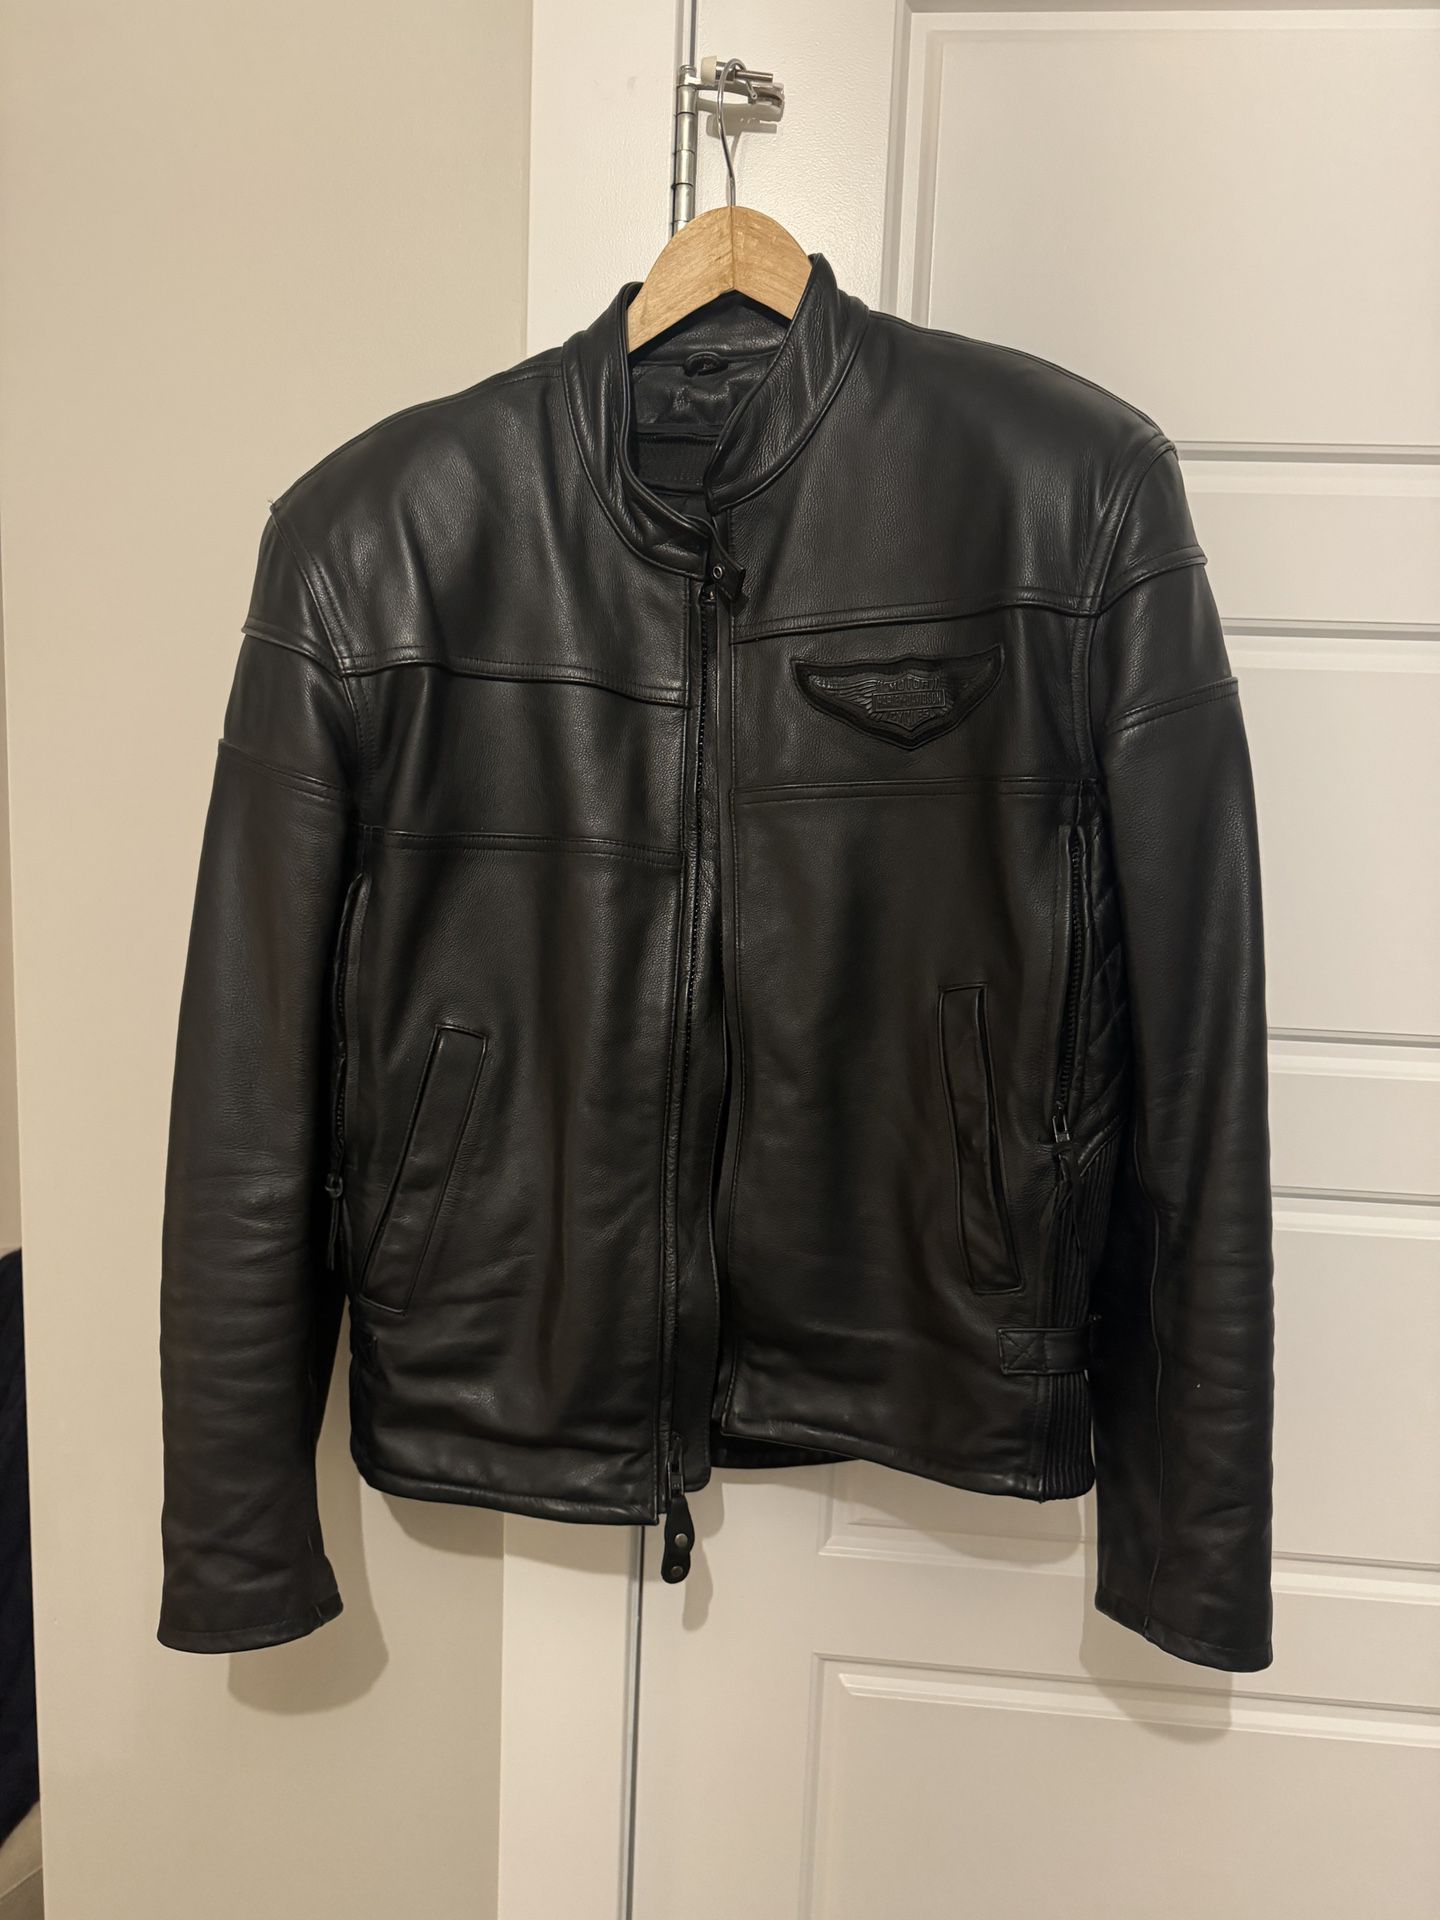 Harley-Davidson Men’s Competition Touring Leather Jacket- Medium